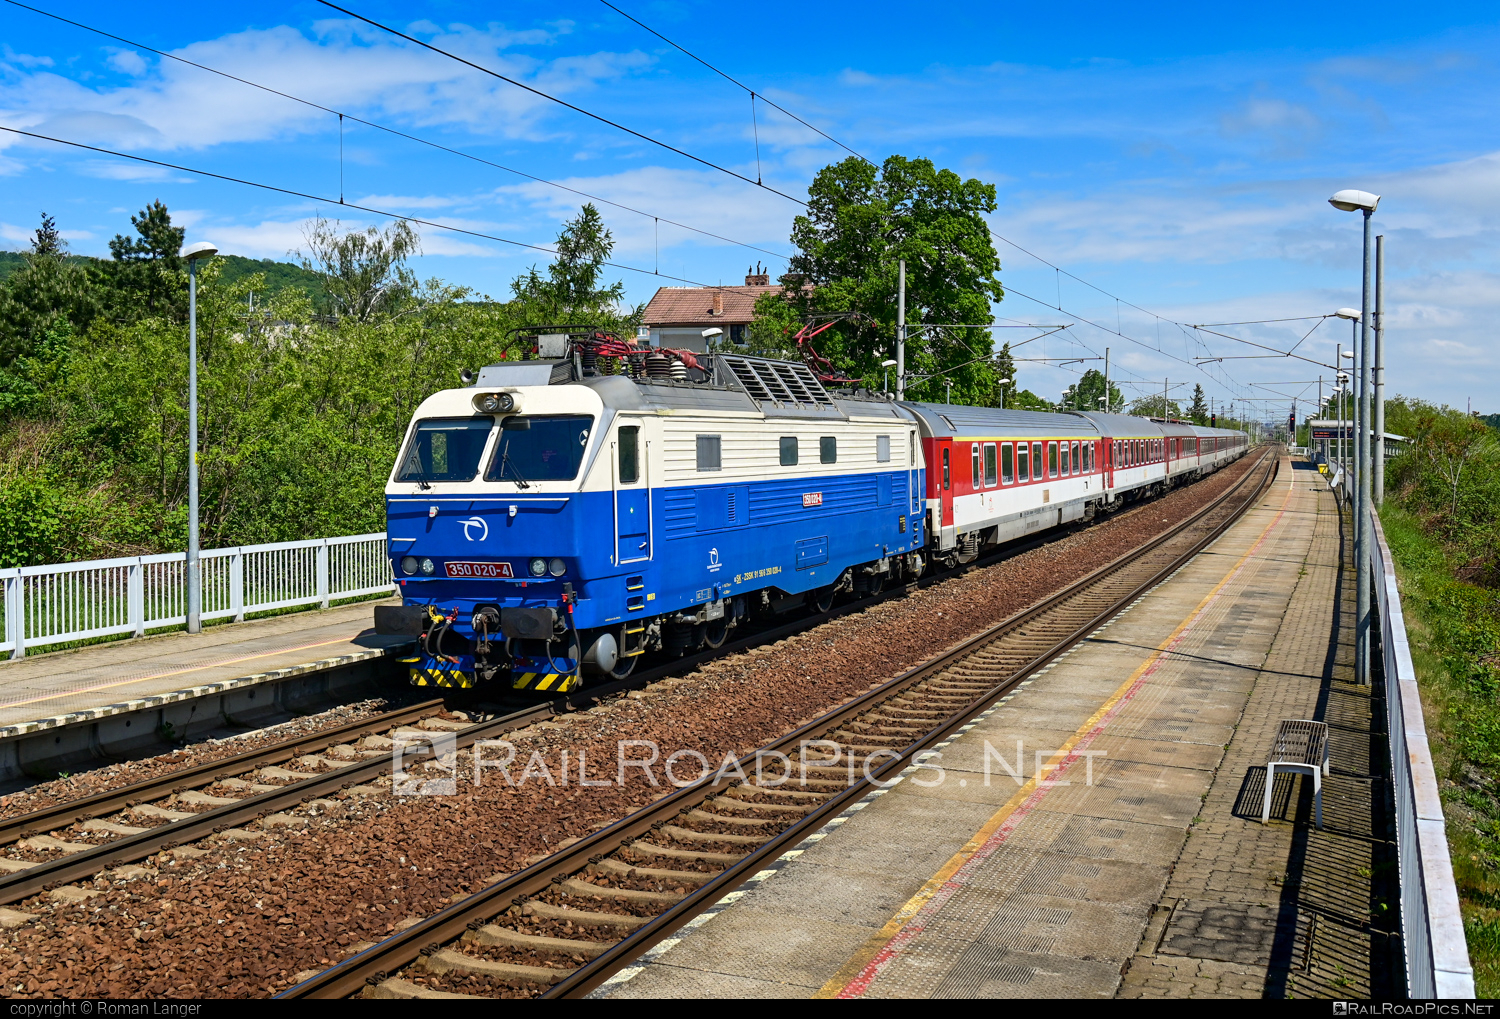 Škoda 55E - 350 020-4 operated by Železničná Spoločnost' Slovensko, a.s. #ZeleznicnaSpolocnostSlovensko #gorila #locomotive350 #skoda #skoda55e #zssk